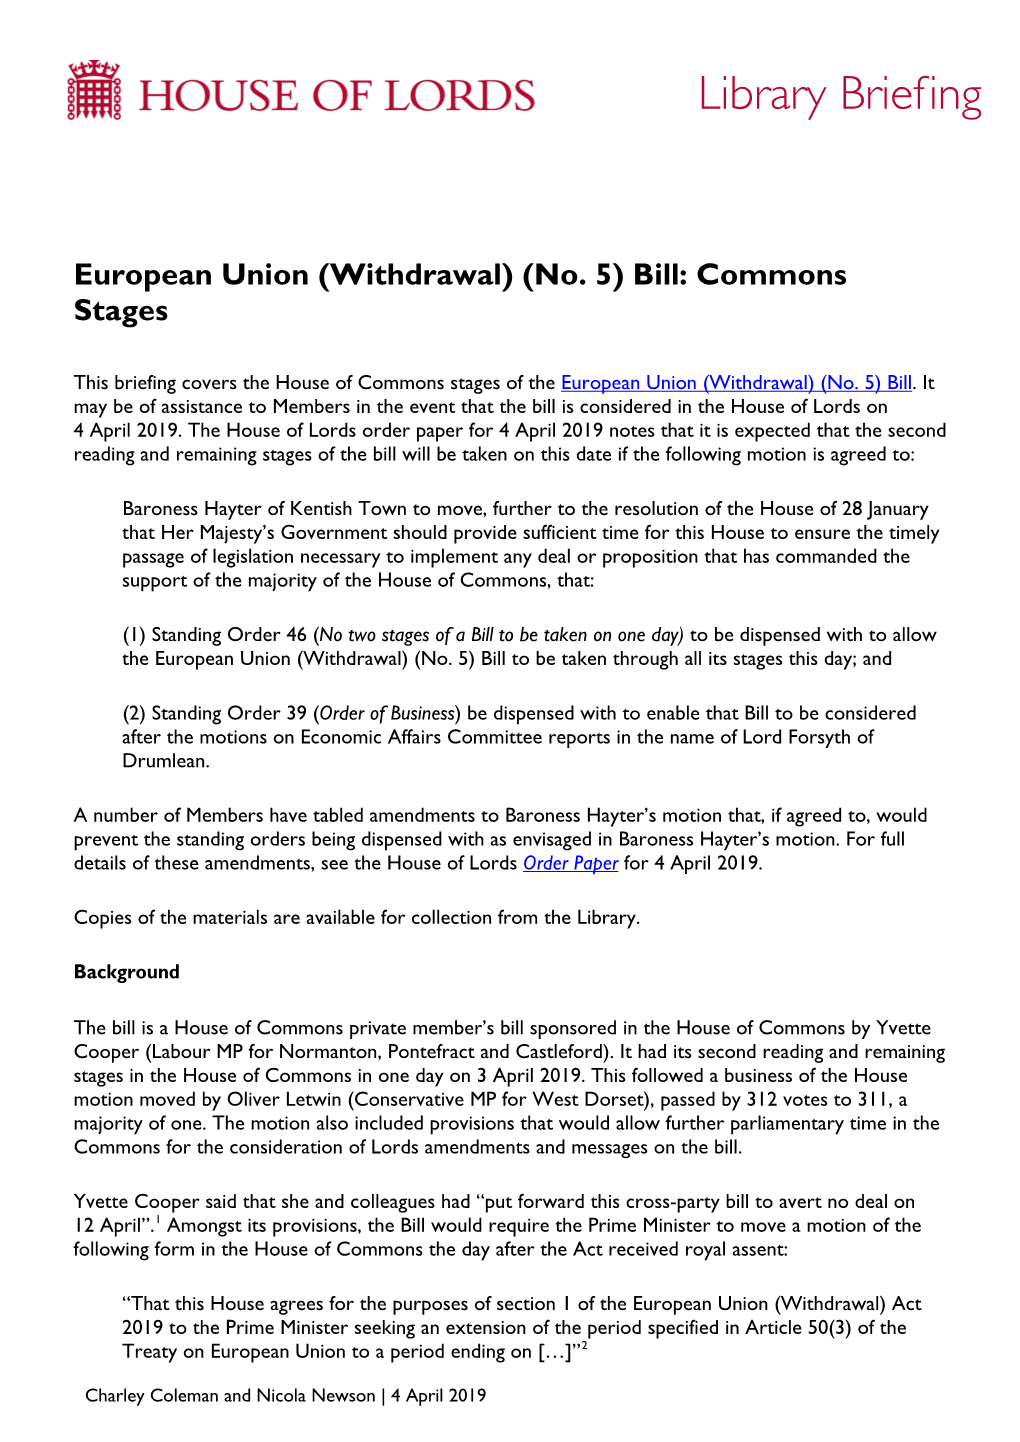 European Union (Withdrawal) (No